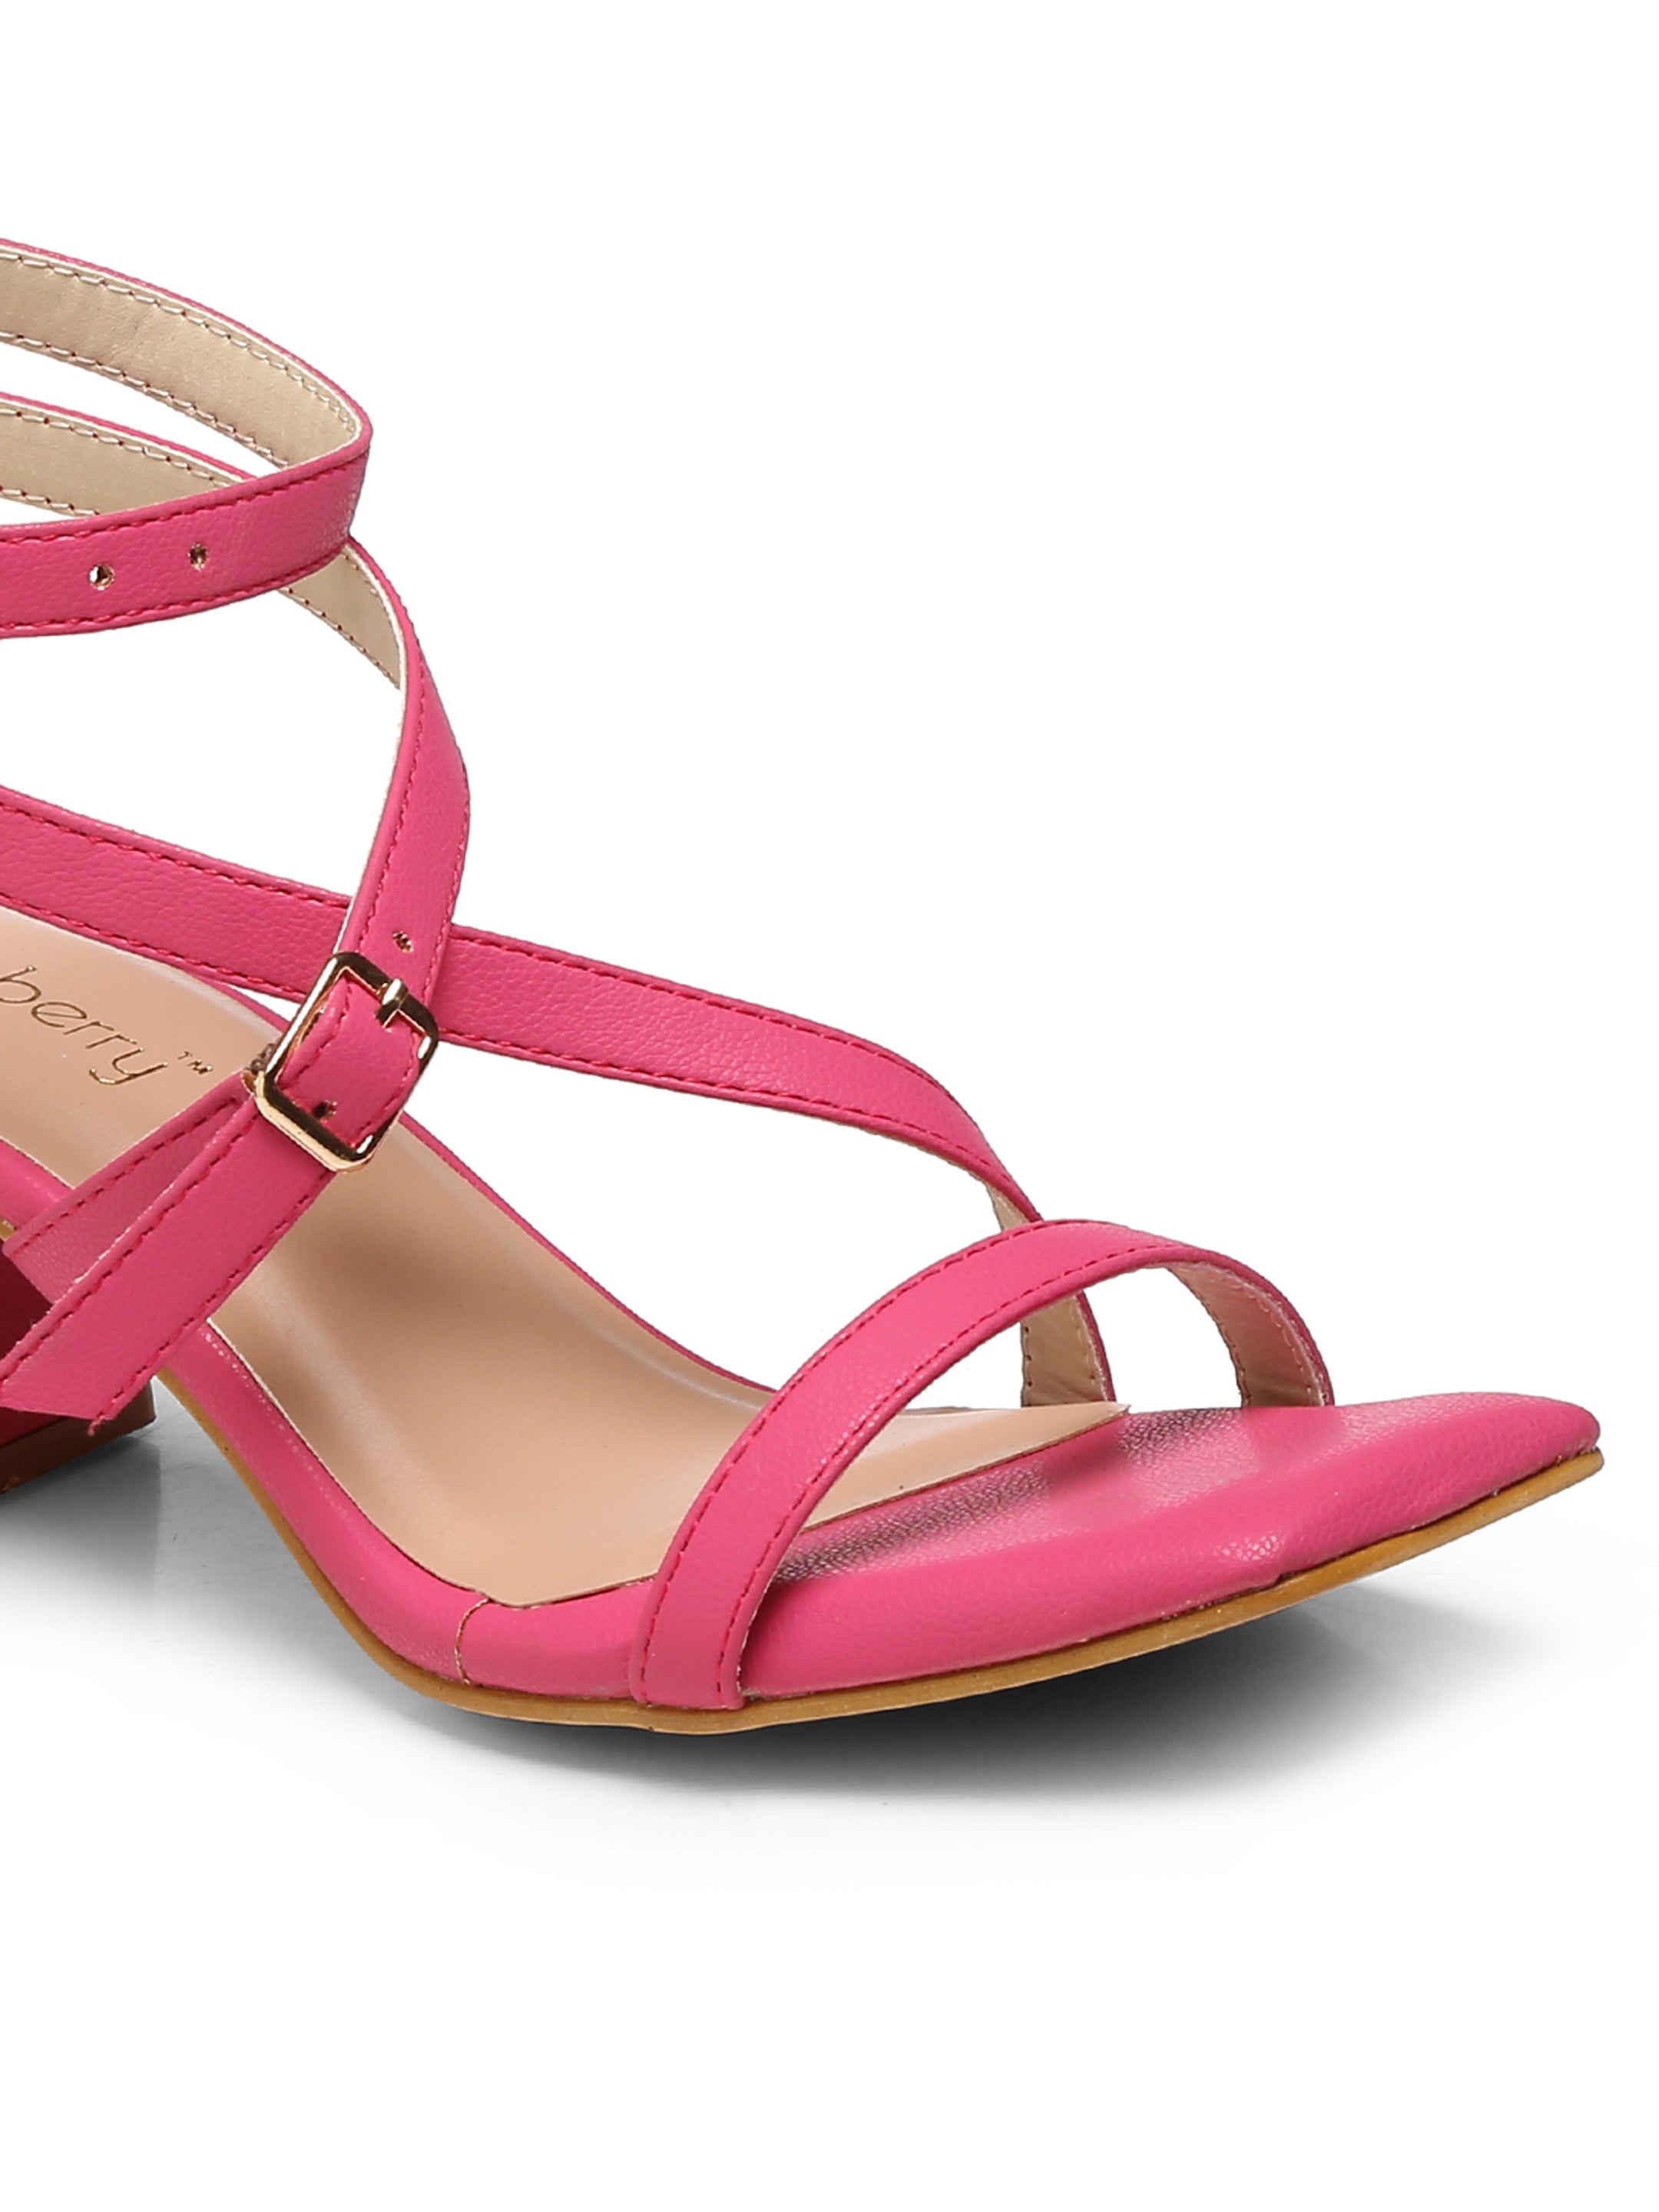 GNIST Pink Ankle Strap Block Heel